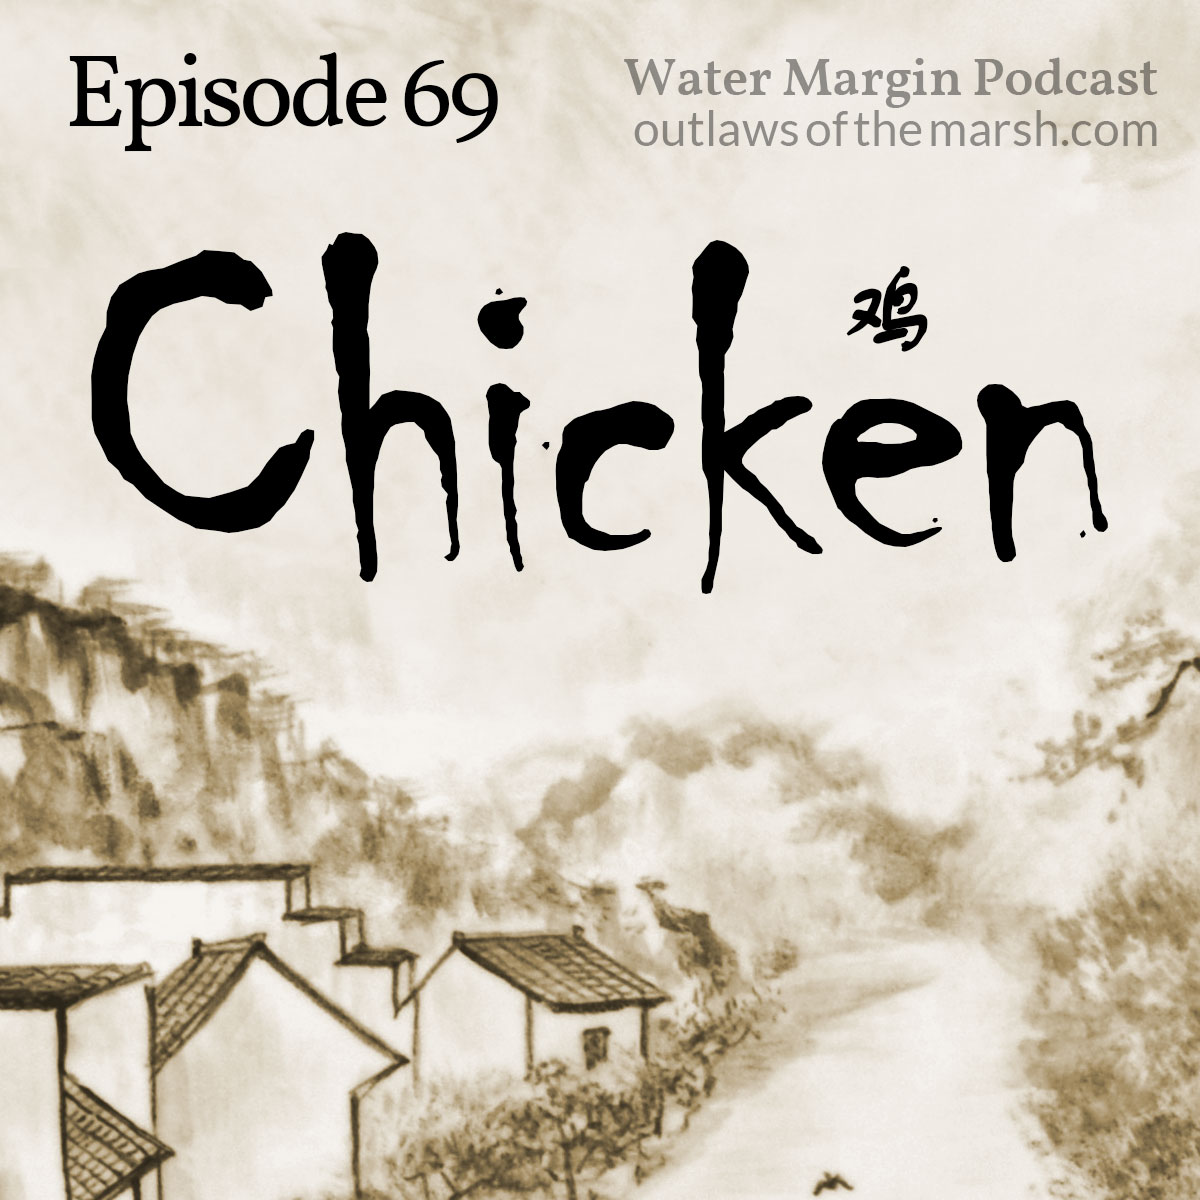 Water Margin Podcast: Episode 069